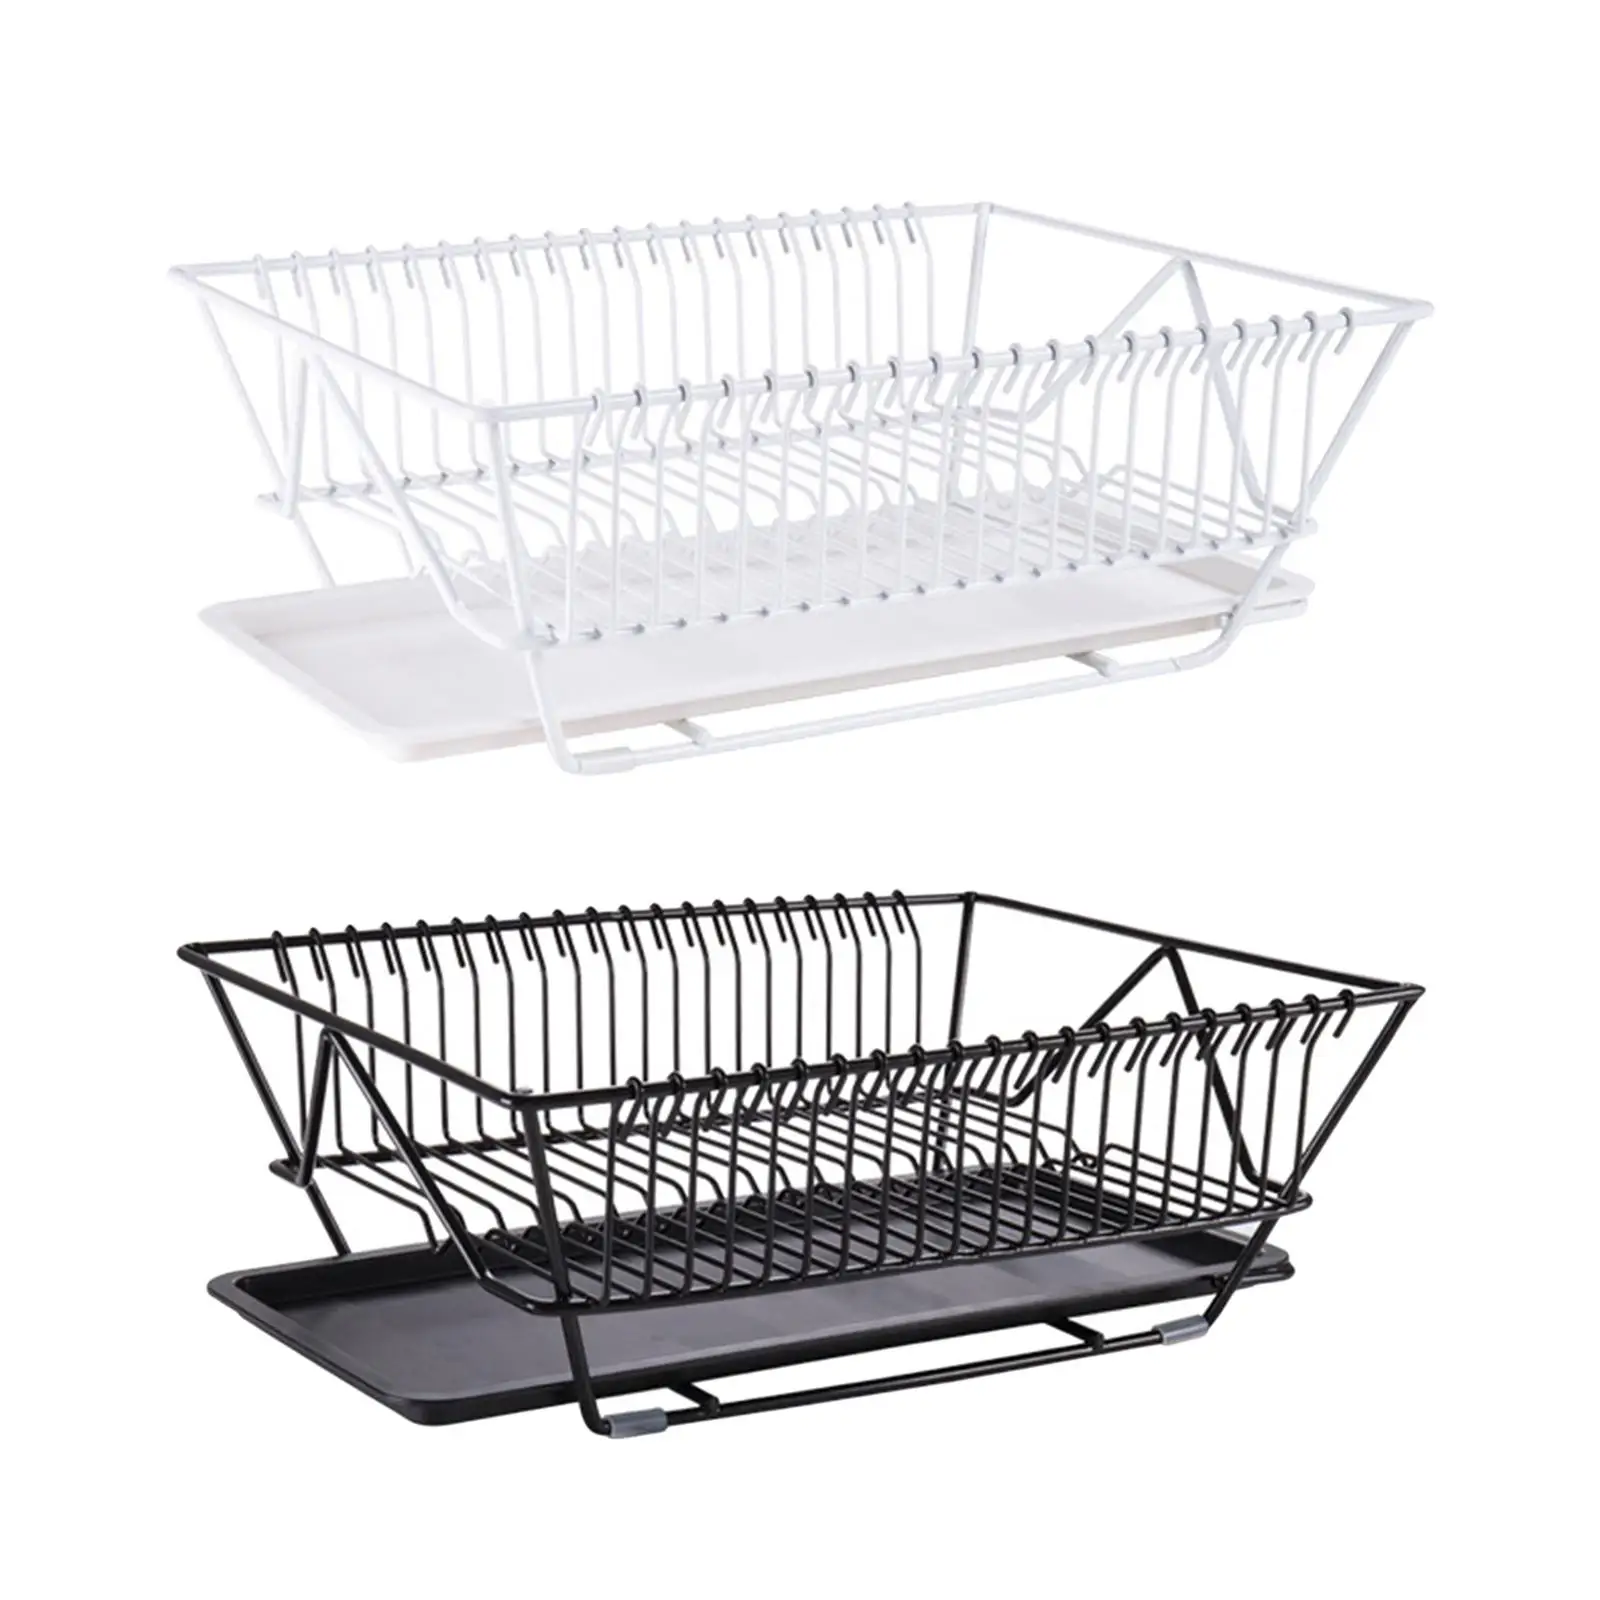 https://ae01.alicdn.com/kf/Sbcf44768f3e543aa96a7e1799d21bddee/Large-Capacity-Dish-Drying-Rack-Rustproof-Shelf-Sink-Dish-Drainer-for-Countertop-Organization.jpg